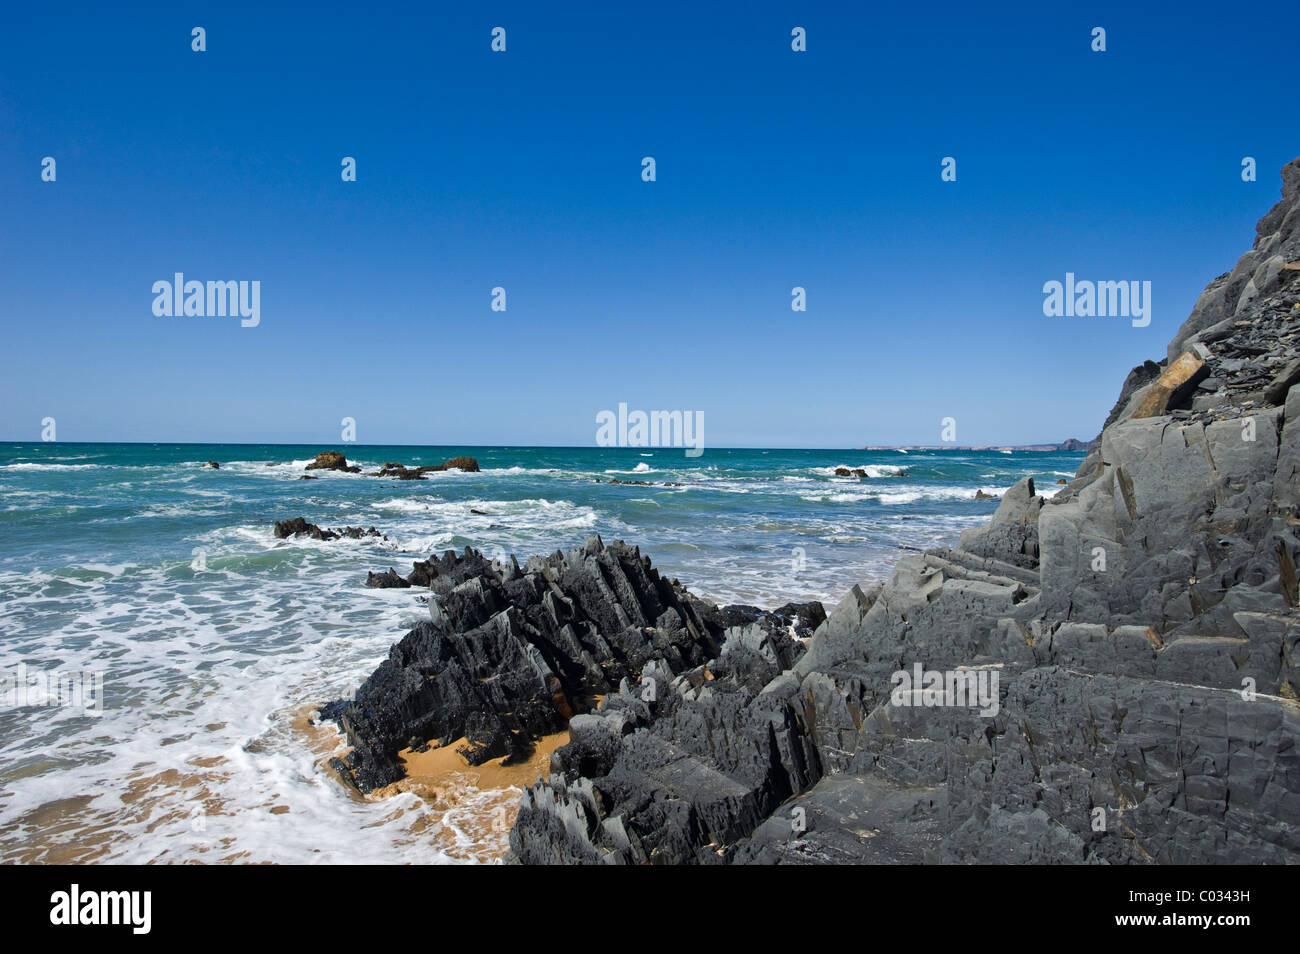 Praia do Castelejo beach, Vila do Bispo, Costa Vicentina coast, Algarve region, Portugal, Europe Stock Photo